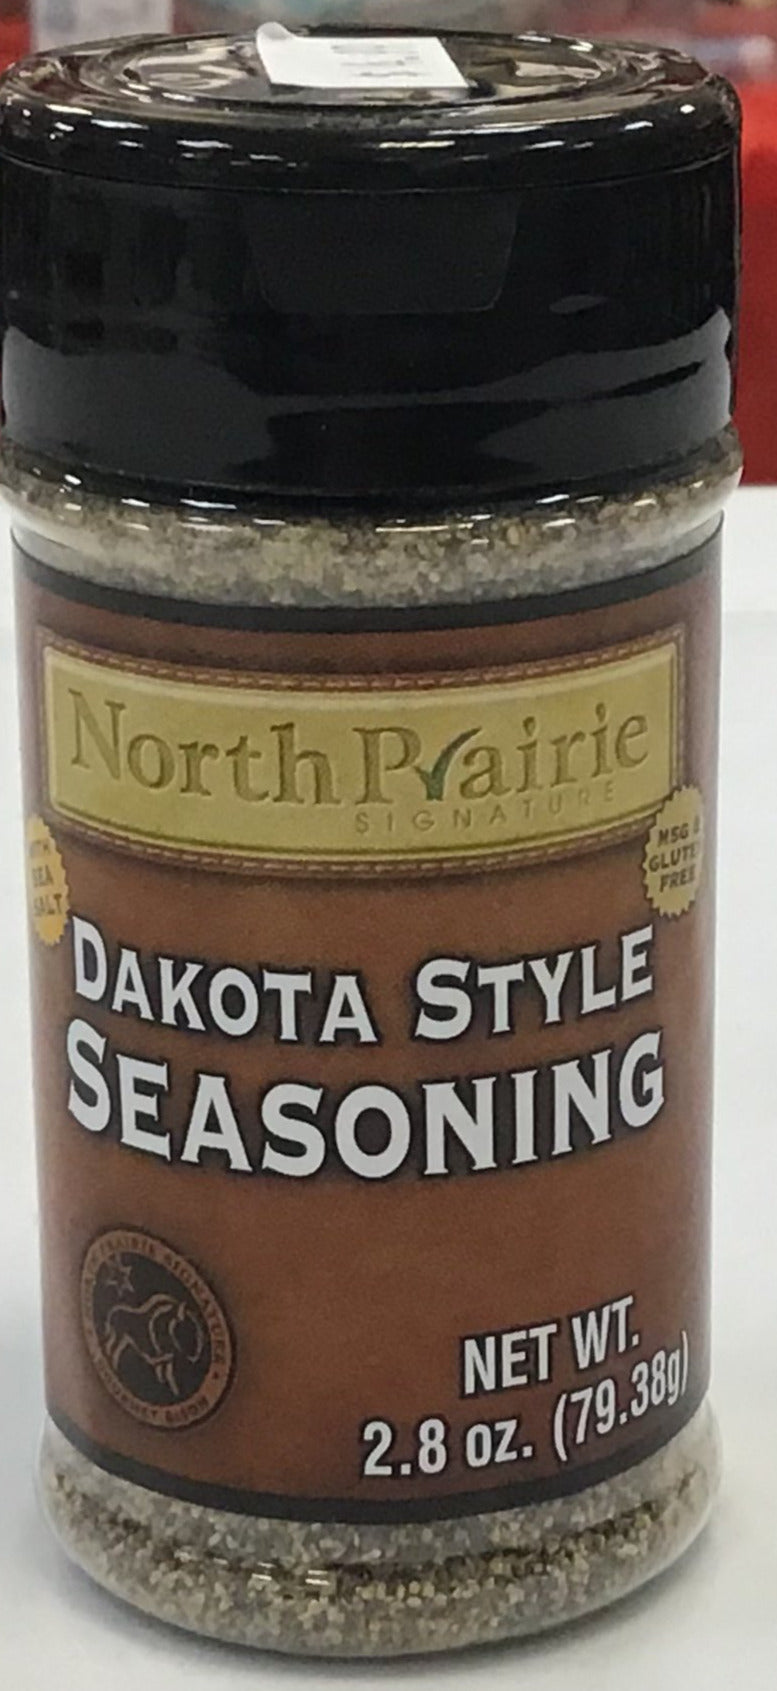 North Prairie Dakota Style Seasoning – Minn Dak Market at West Acres Mall